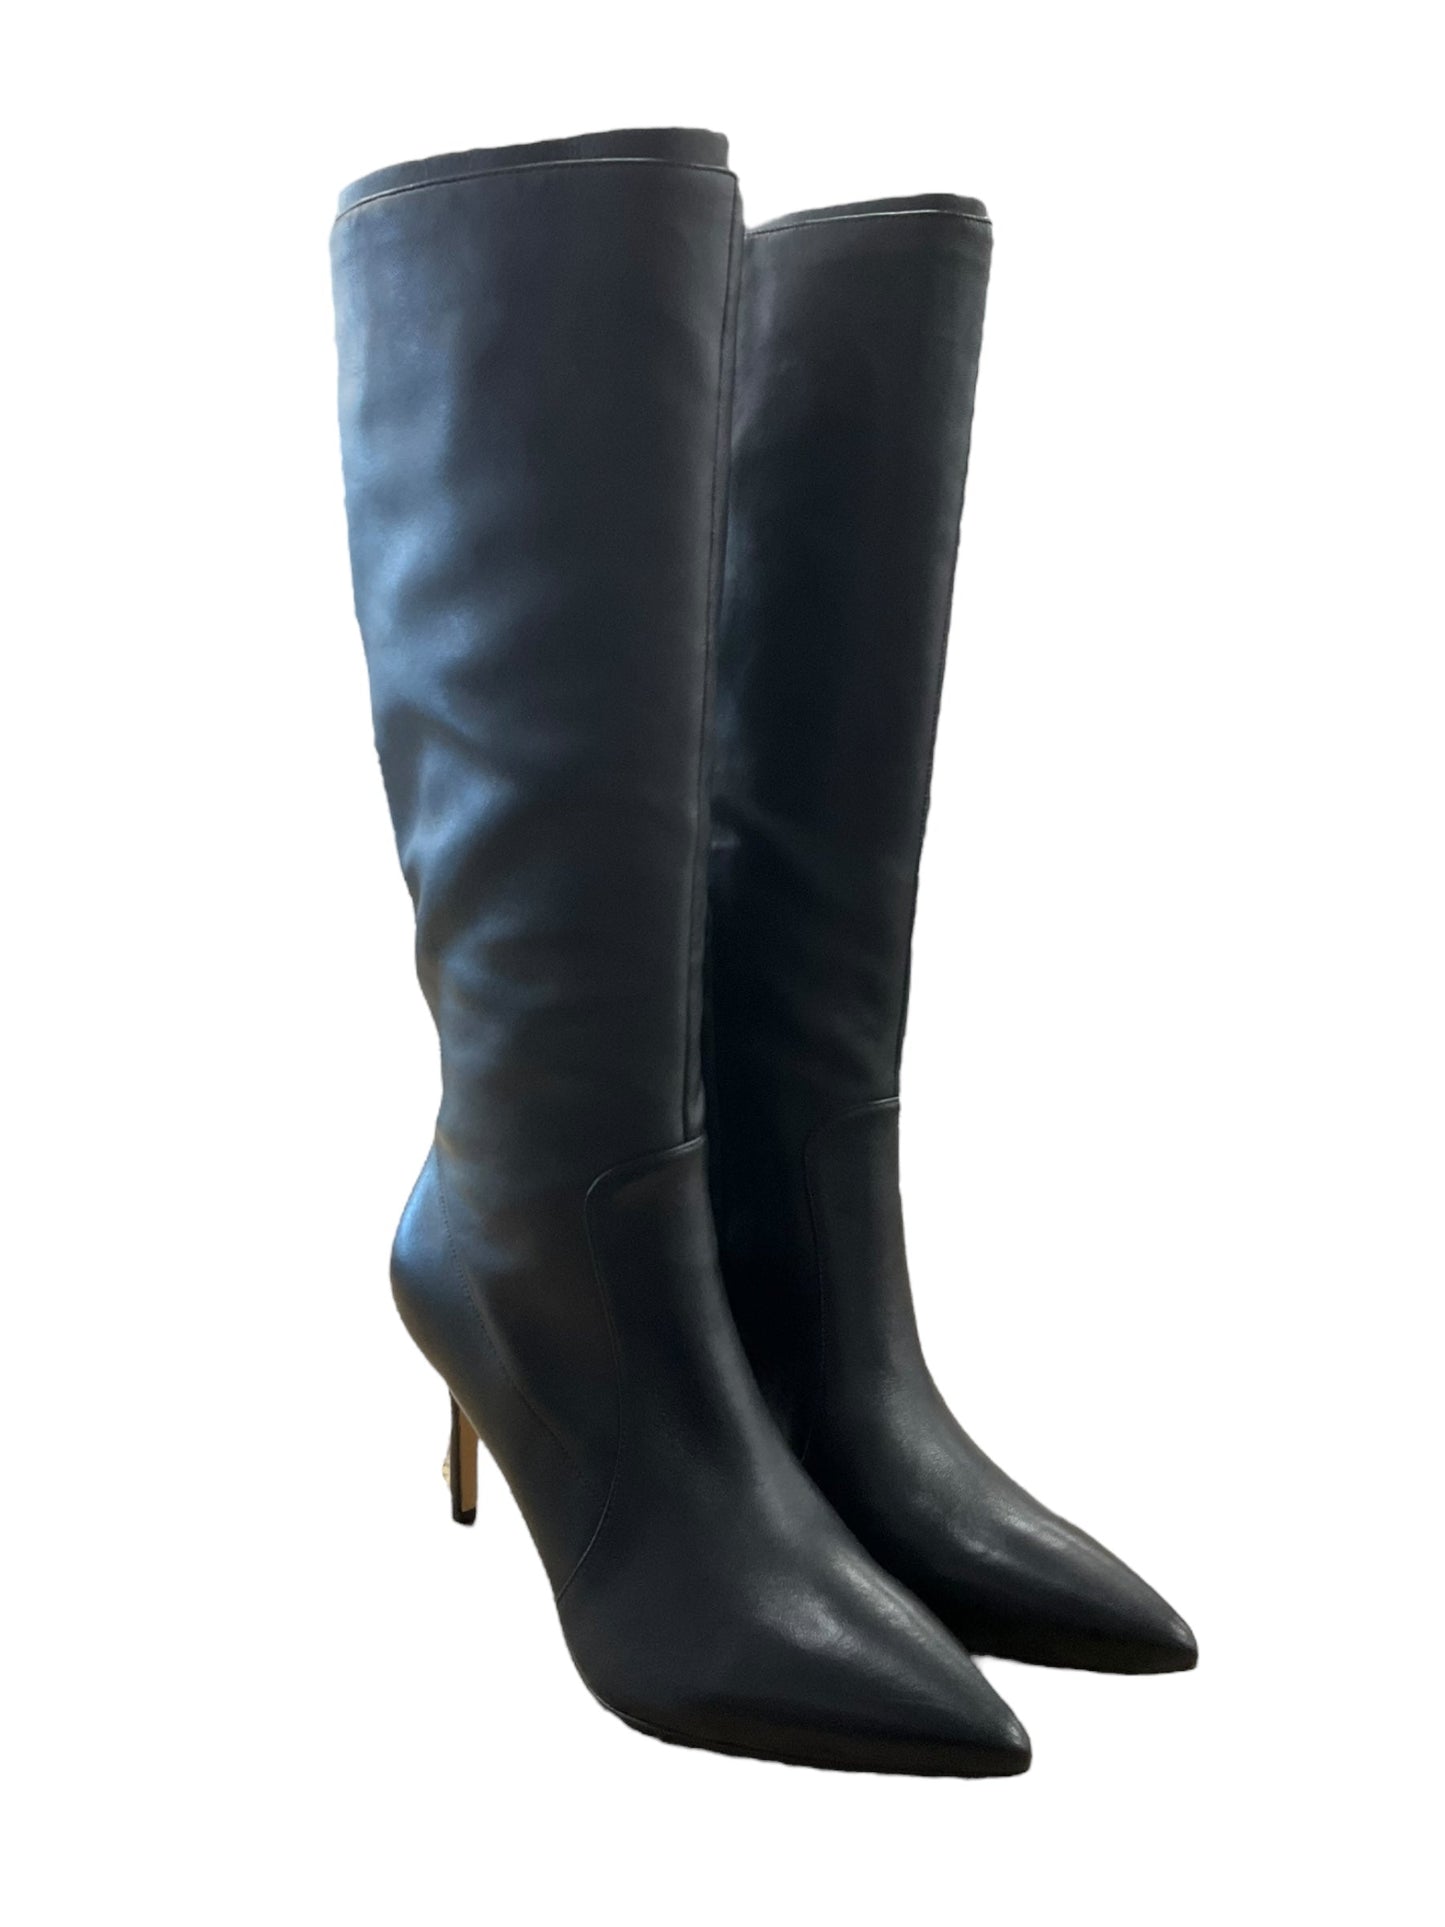 Black Boots Knee Heels Nine West, Size 9.5